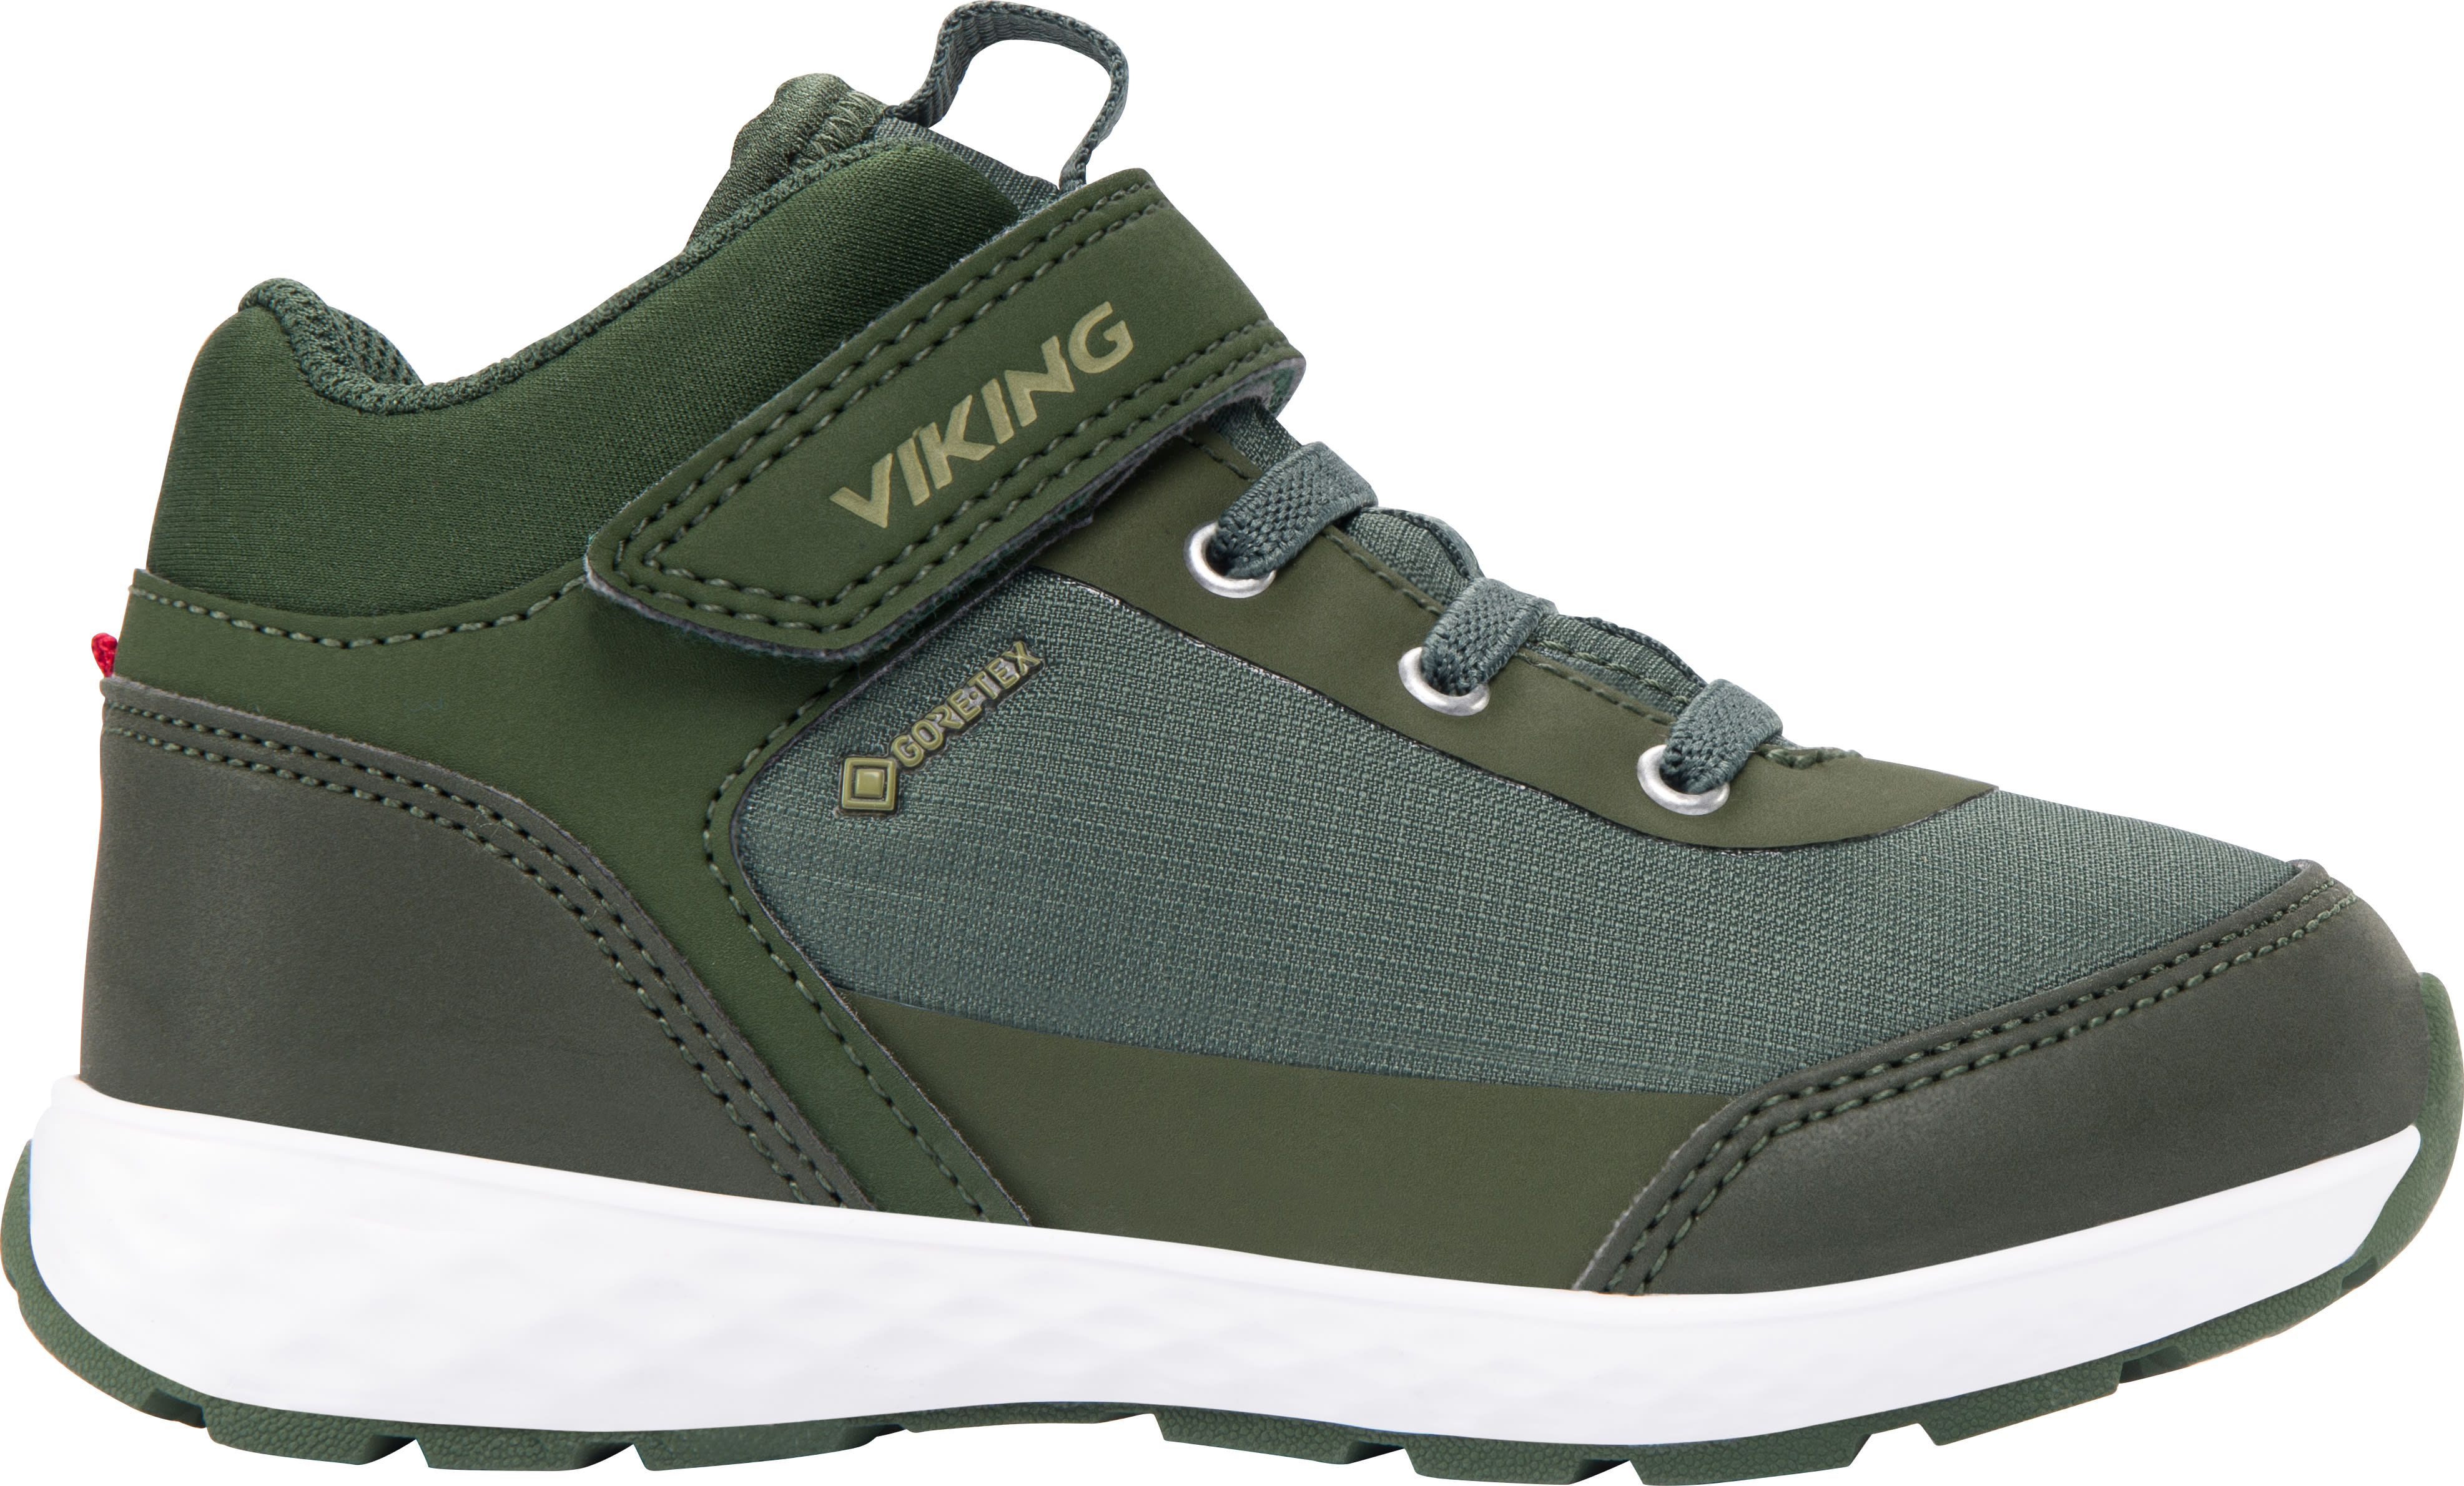 Køb Viking Footwear Spectrum Mid Gore-Tex fra Outnorth